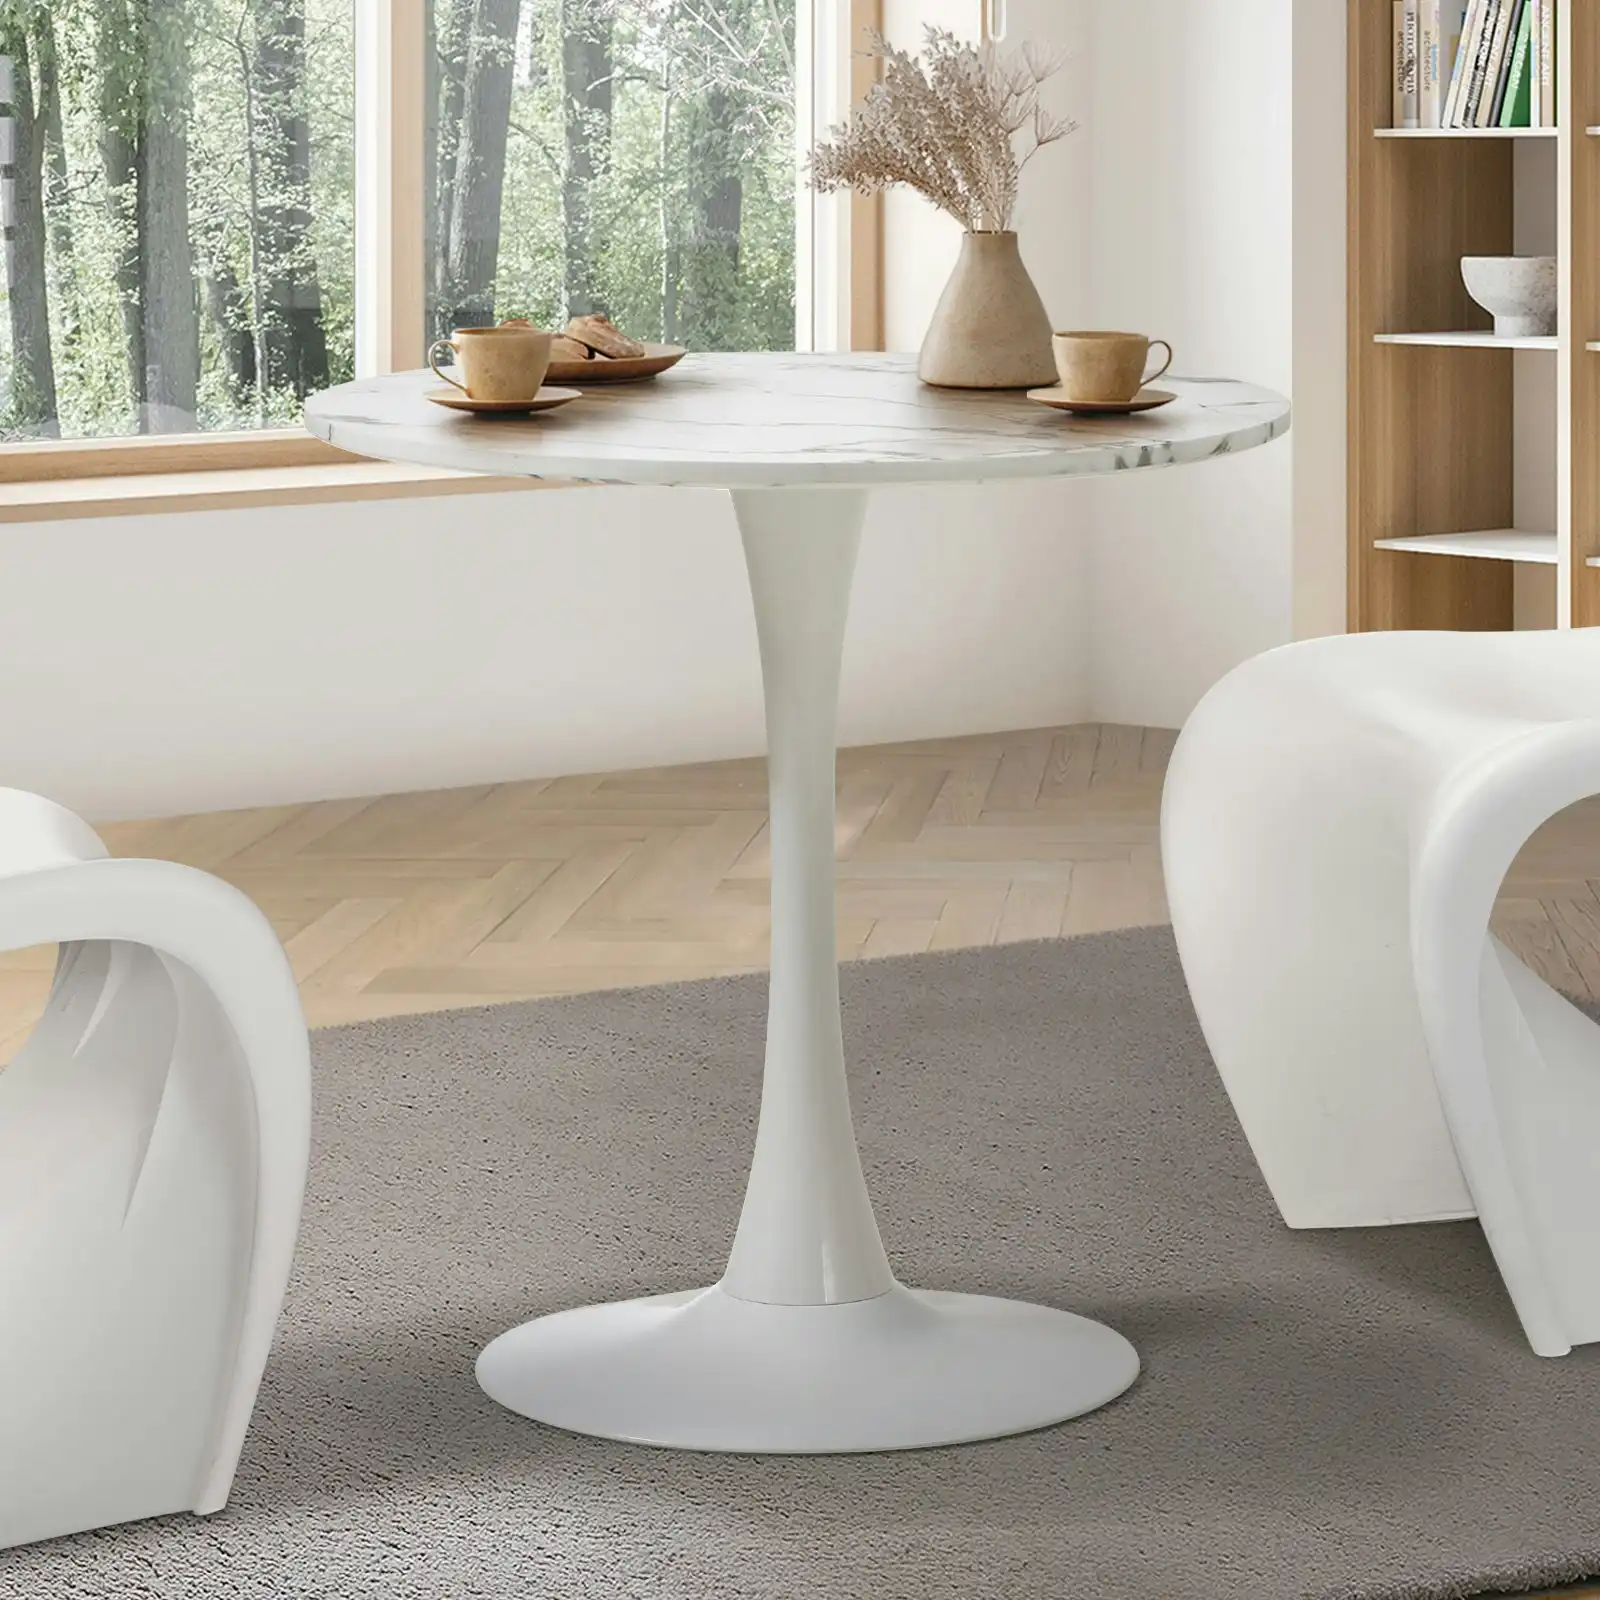 Oikiture 60cm Dining Table Kitchen Marble Tulip Round Metal Leg White